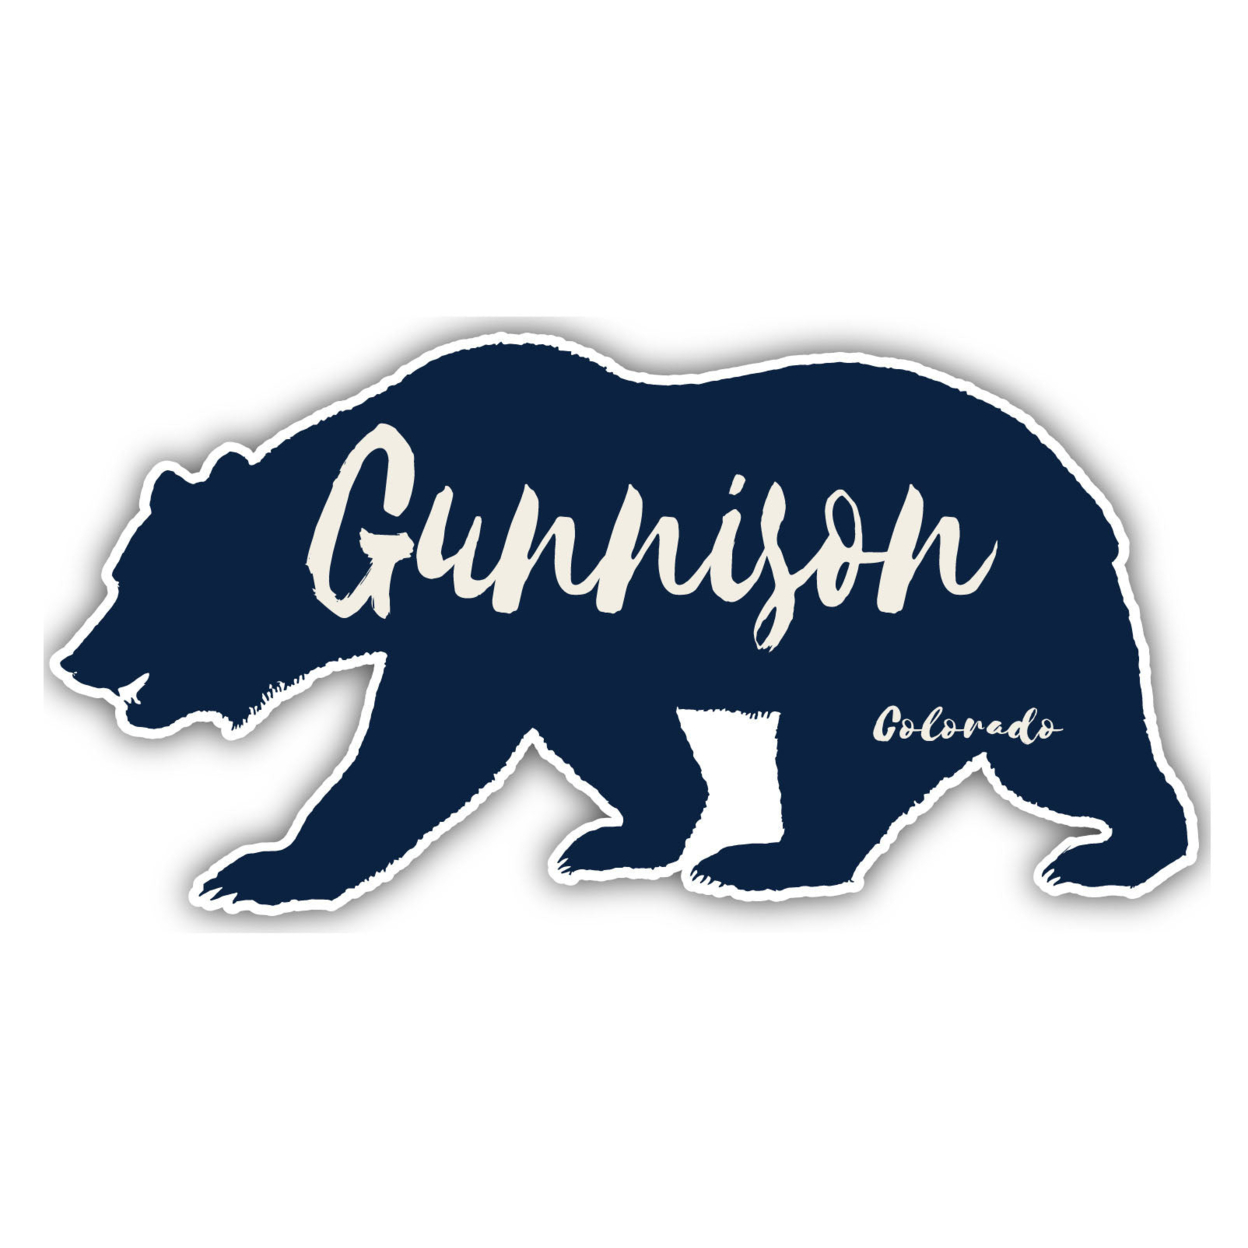 Gunnison Colorado Souvenir Decorative Stickers (Choose Theme And Size) - 4-Pack, 10-Inch, Tent